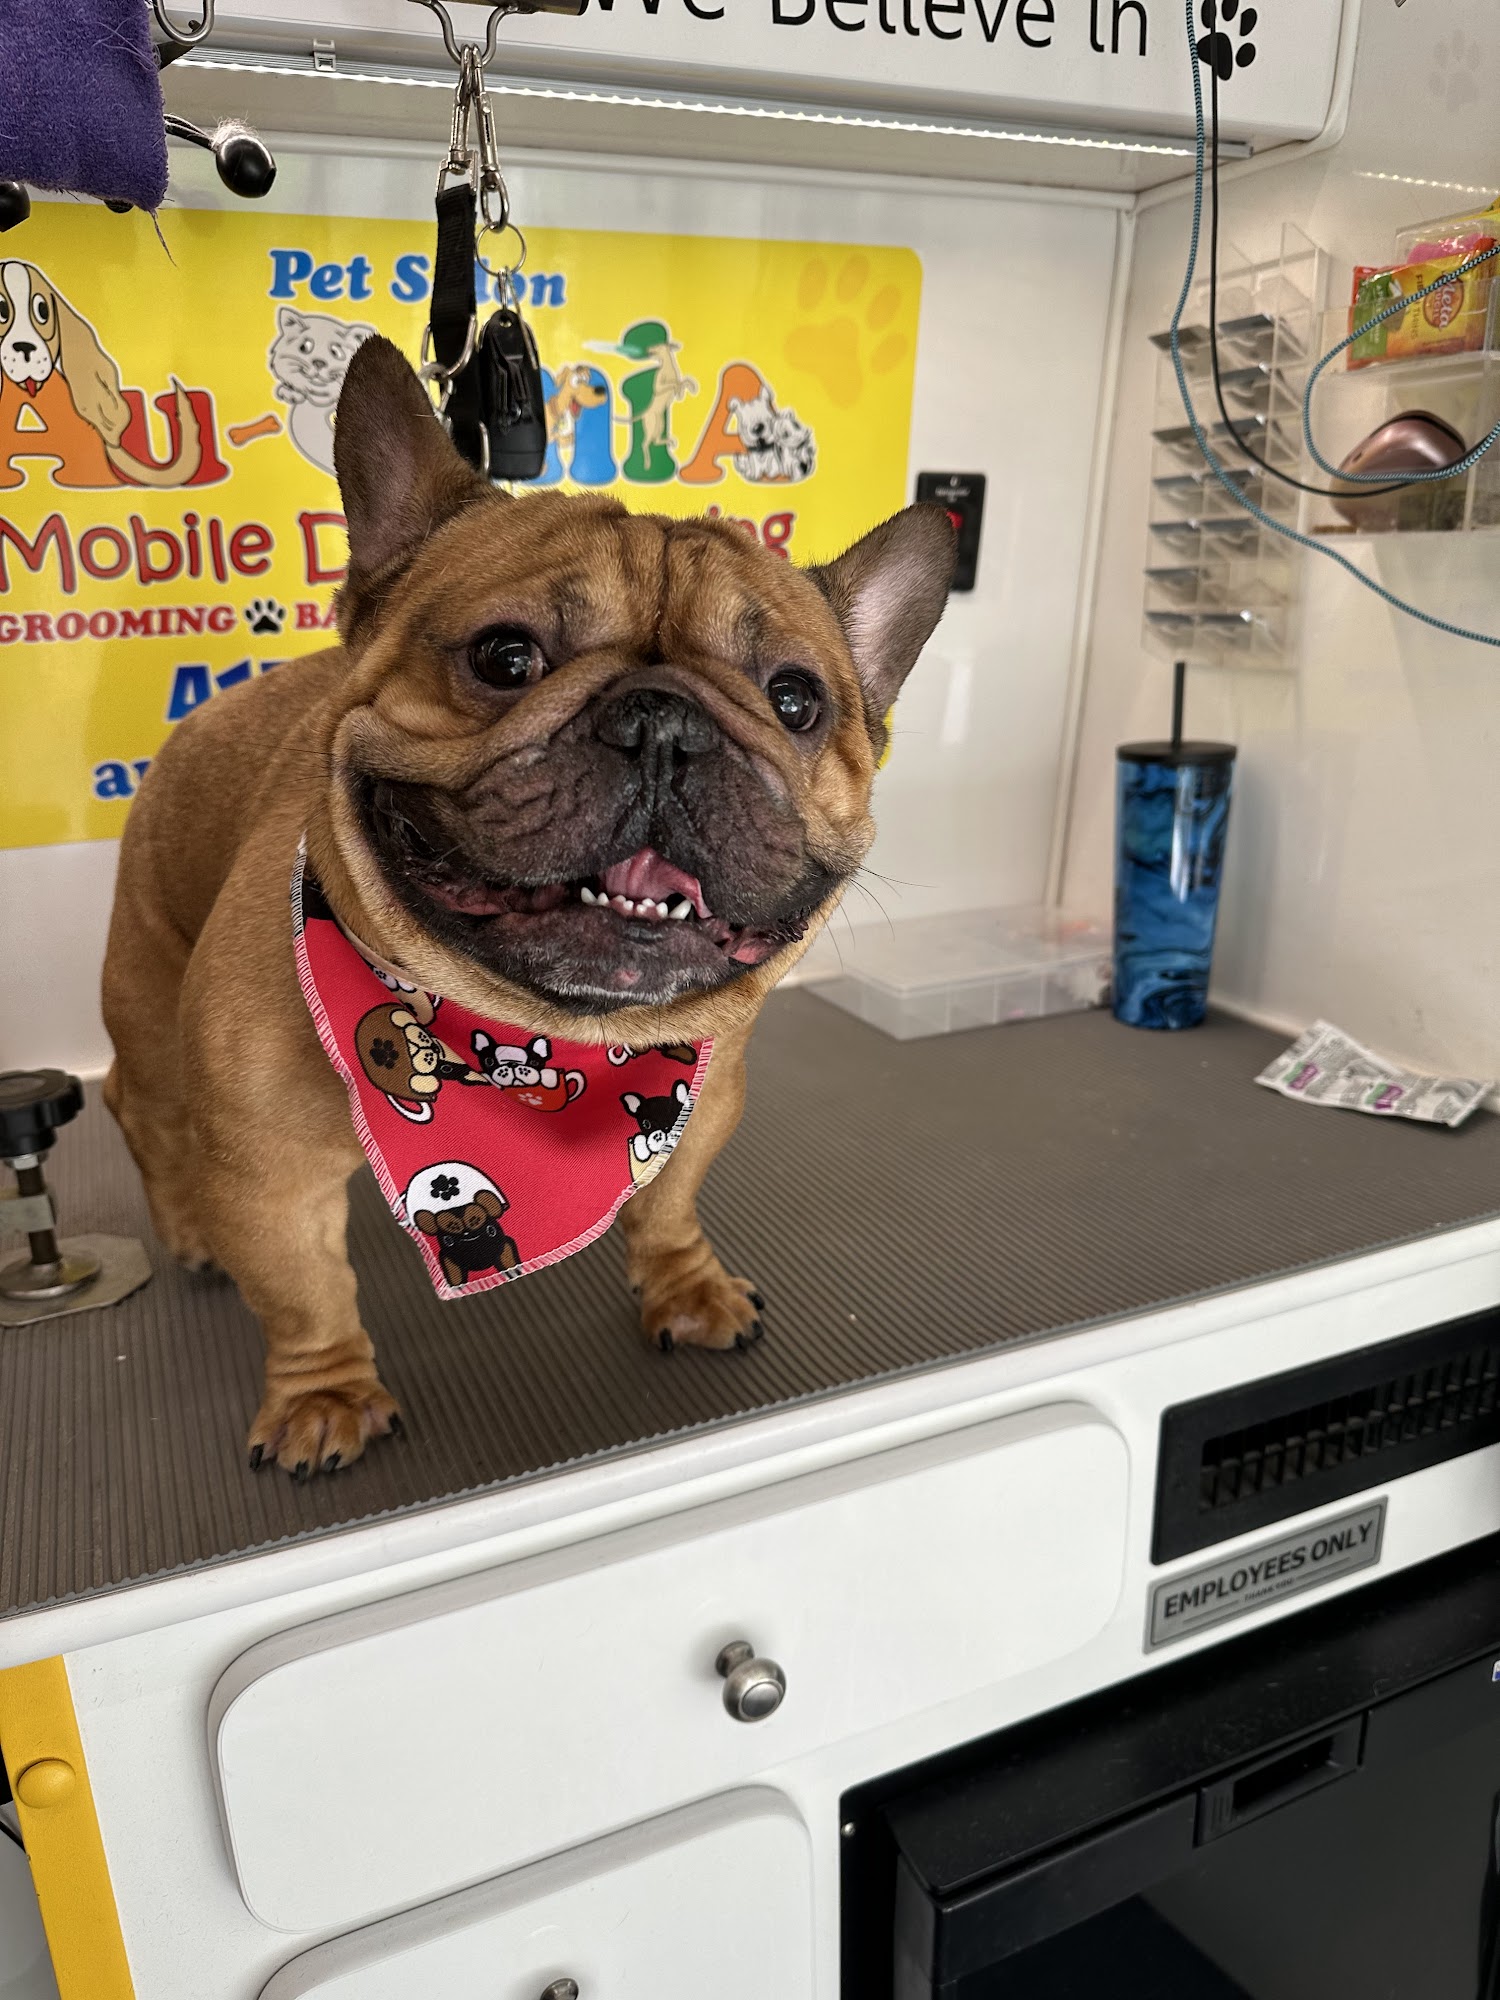 AUQMIA Pet Salon & Mobile Dog Grooming